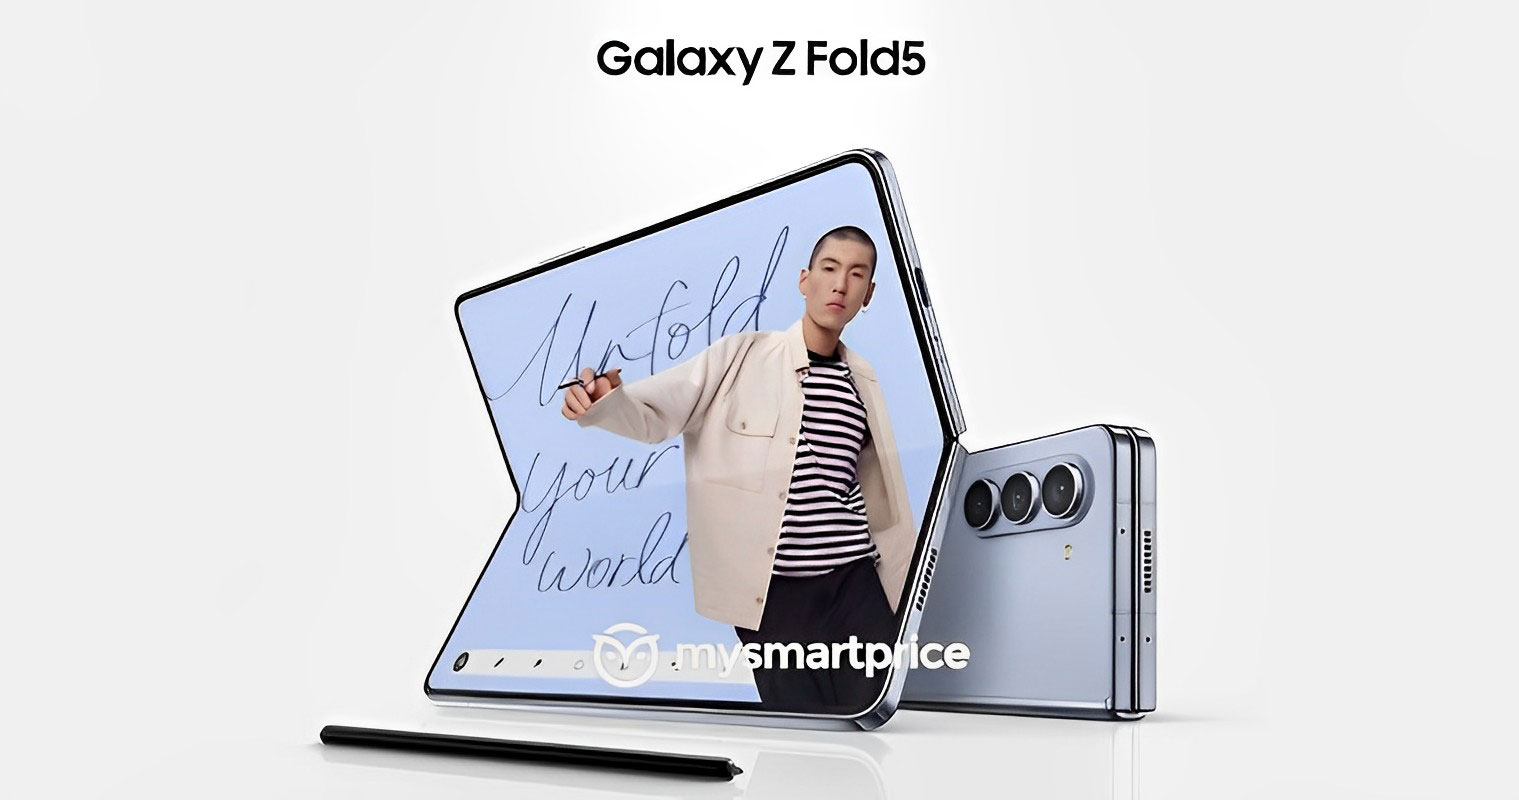 Samsung Galaxy Z Fold 5 will support S Pen